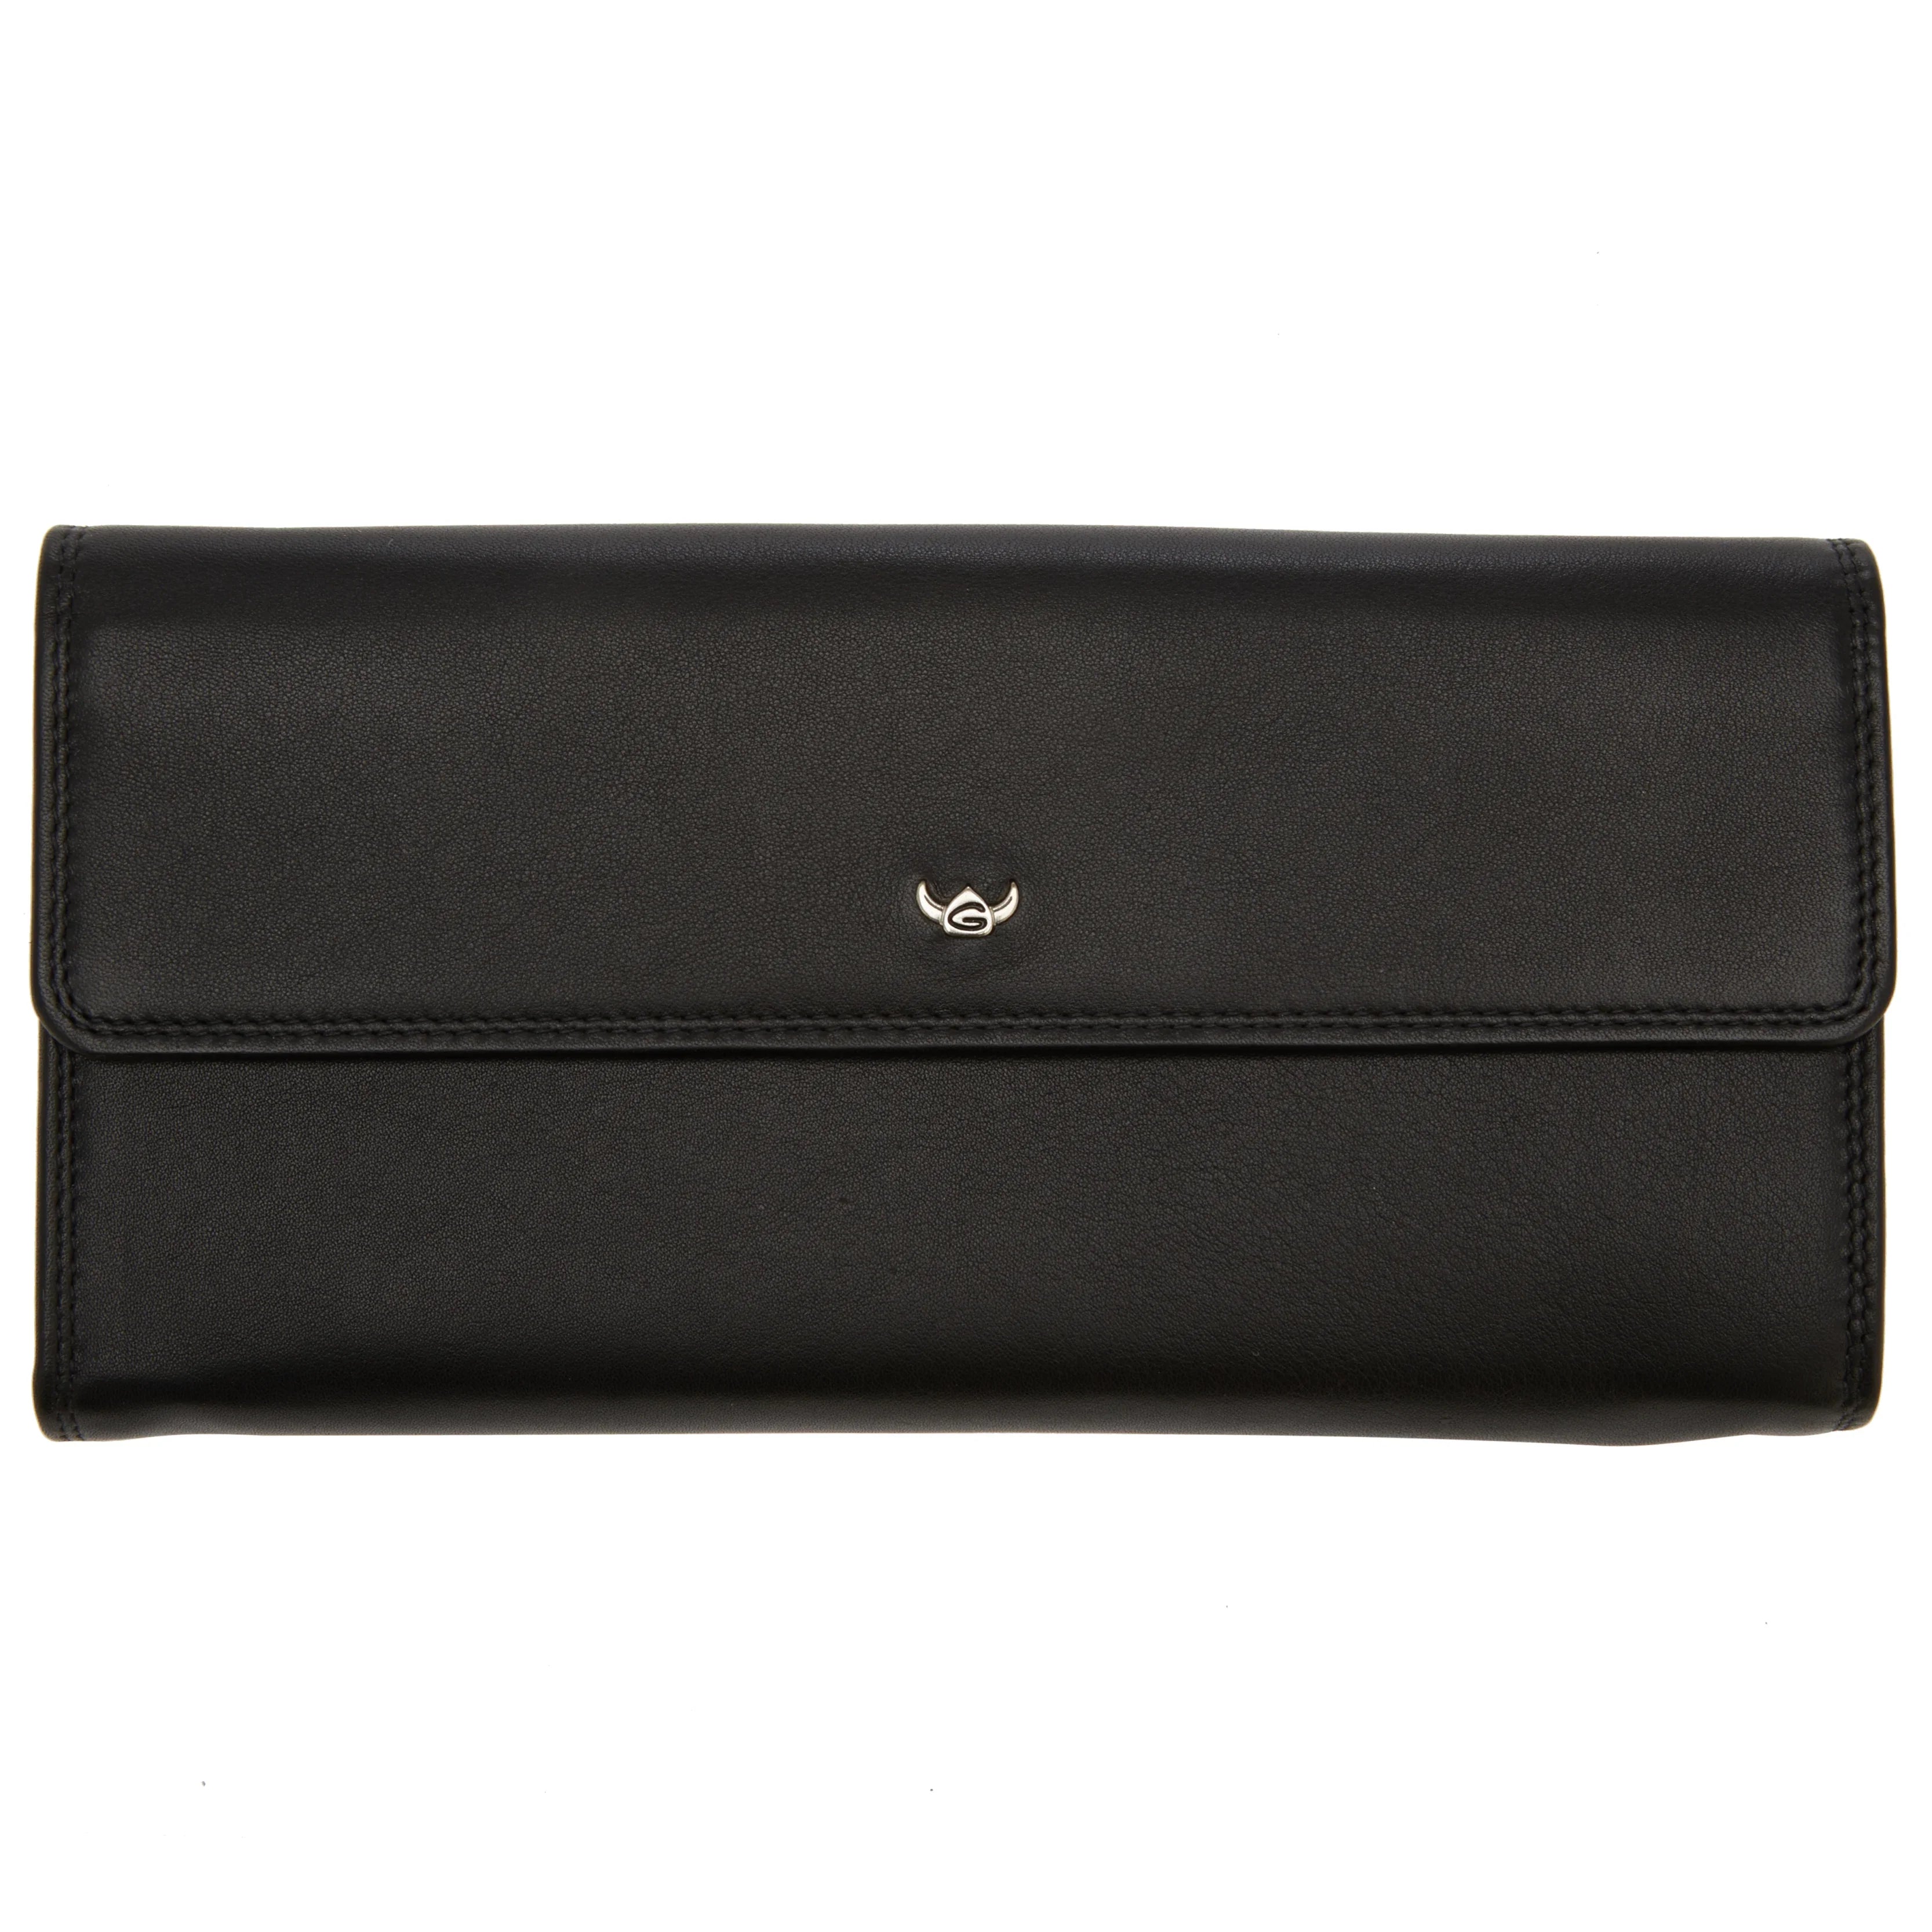 Golden Head Polo ladies' wallet 19 cm - black